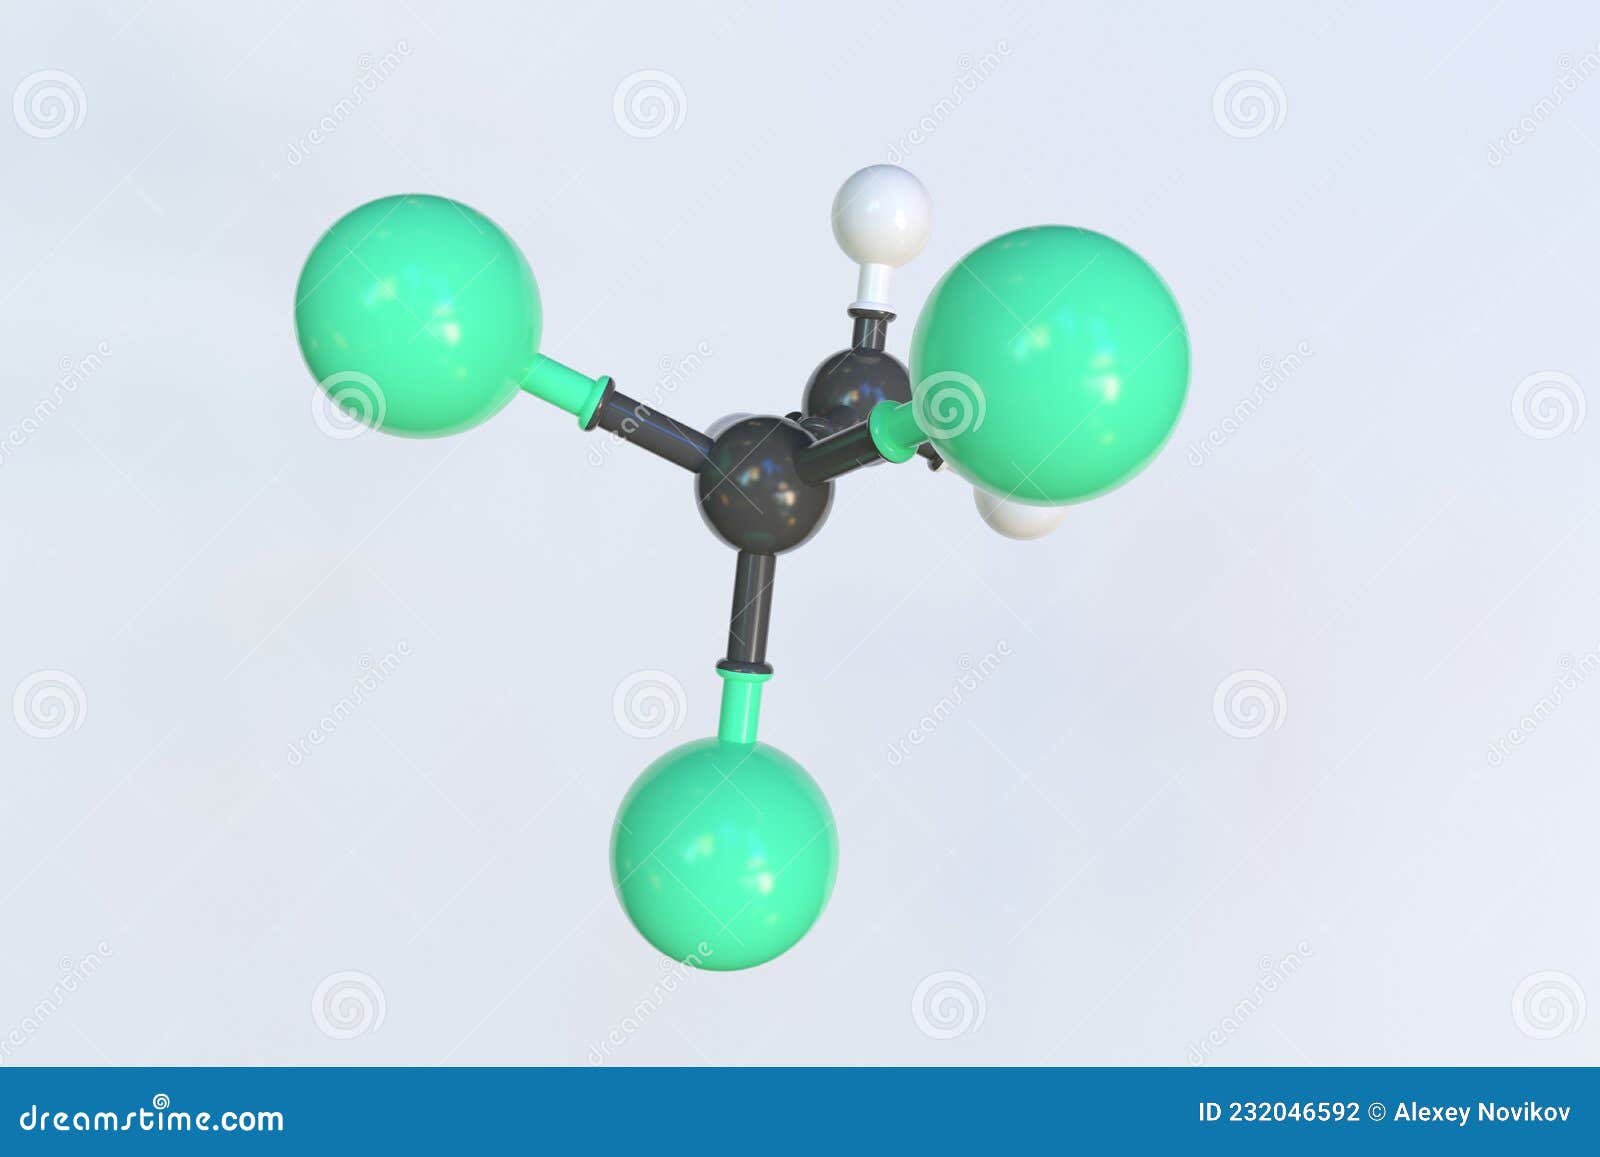 1,1,1-trichloroethane Molecule, Isolated Molecular Model. 3D Rendering ...